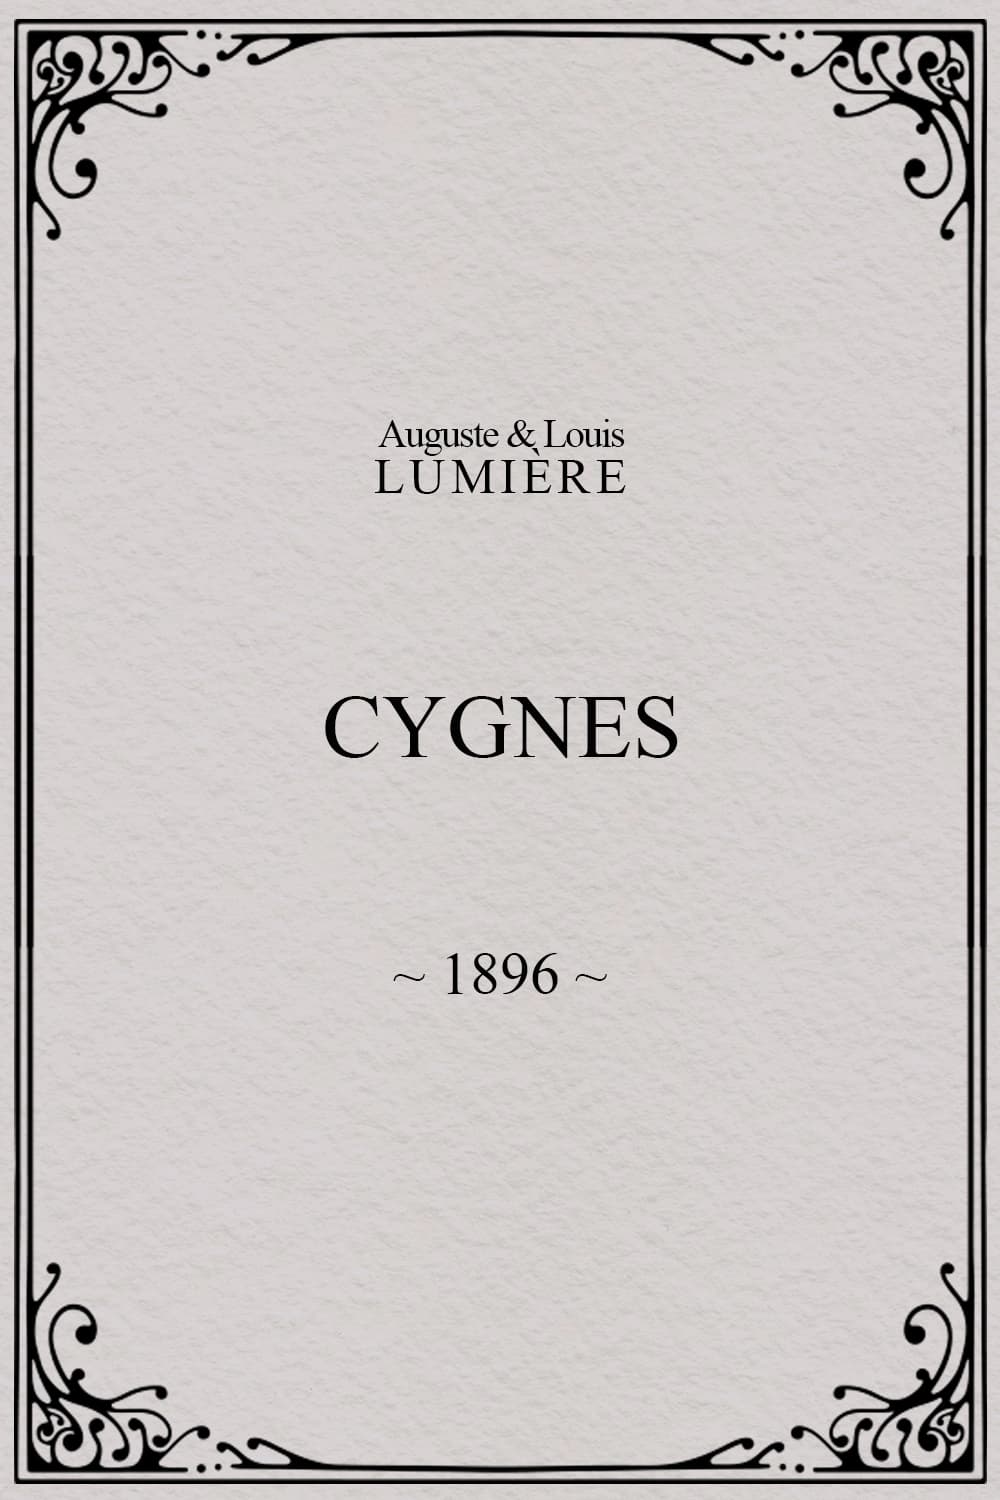 Cygnes (1896)